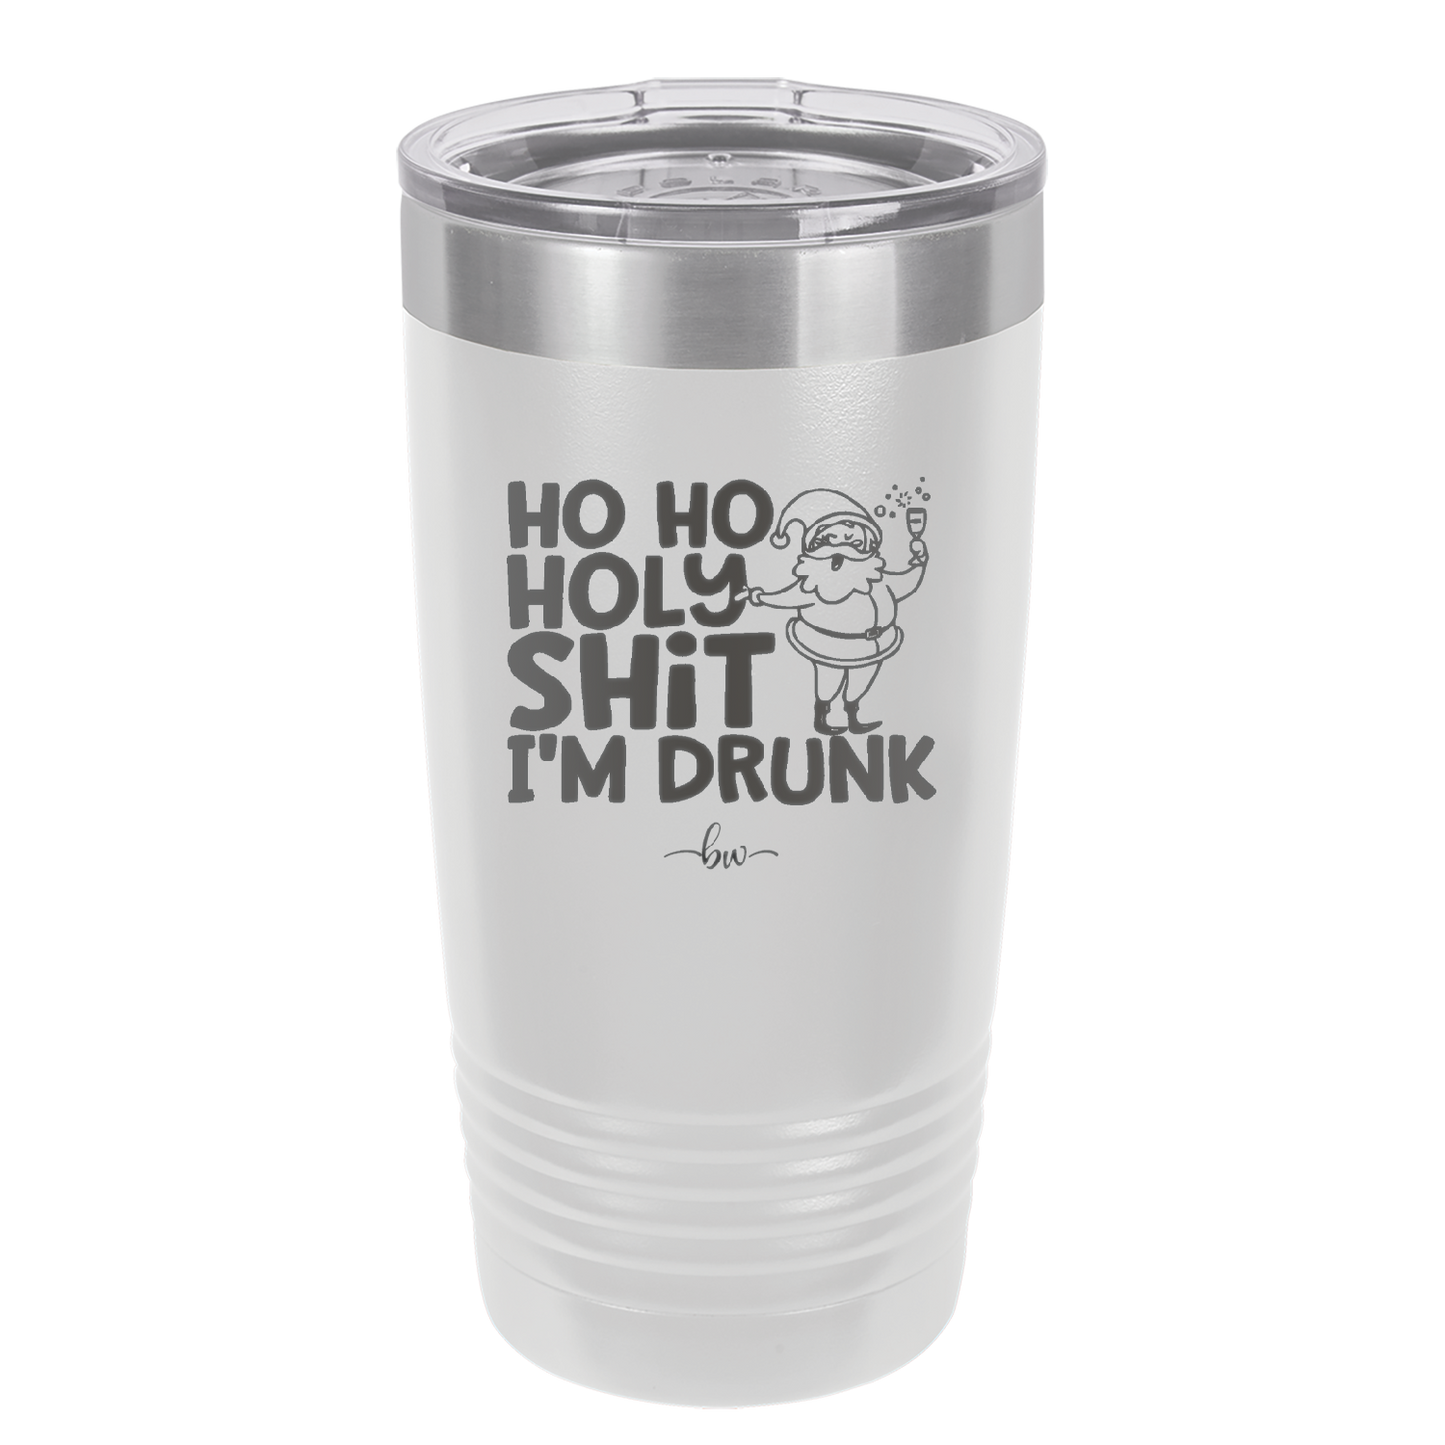 Ho Ho Holy Shit I'm Drunk 2 - Laser Engraved Stainless Steel Drinkware - 1461 -